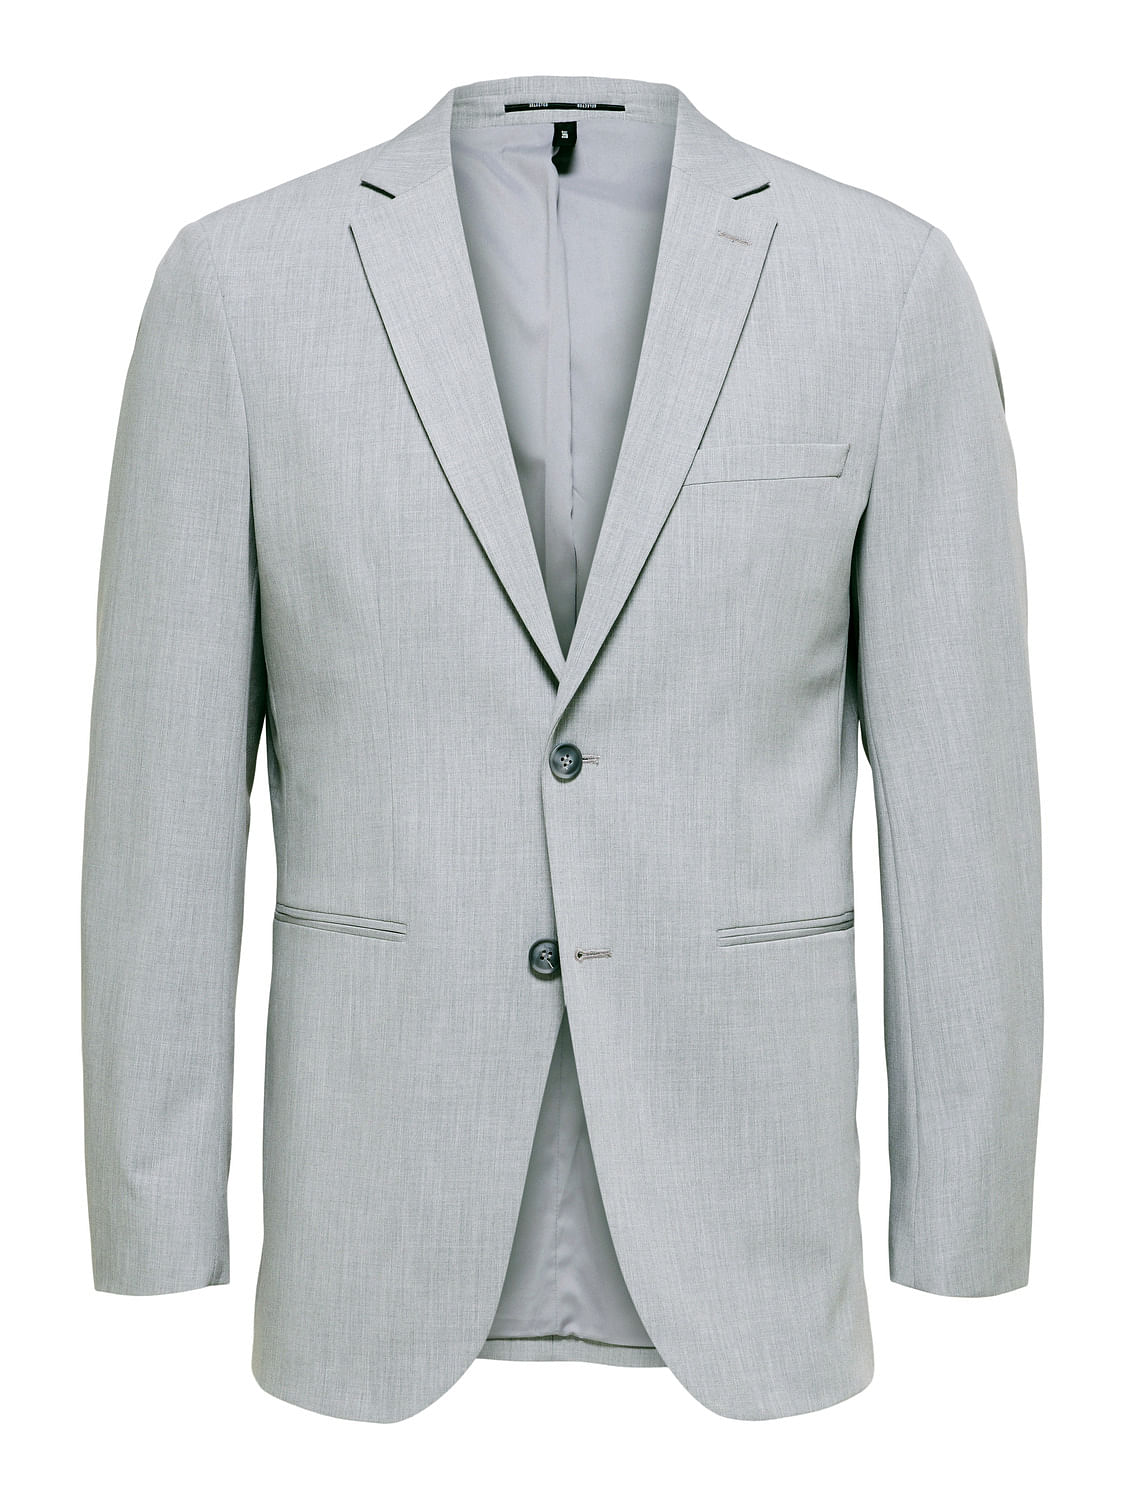 Men Designer Suits and Blazers - Xfitdesigns